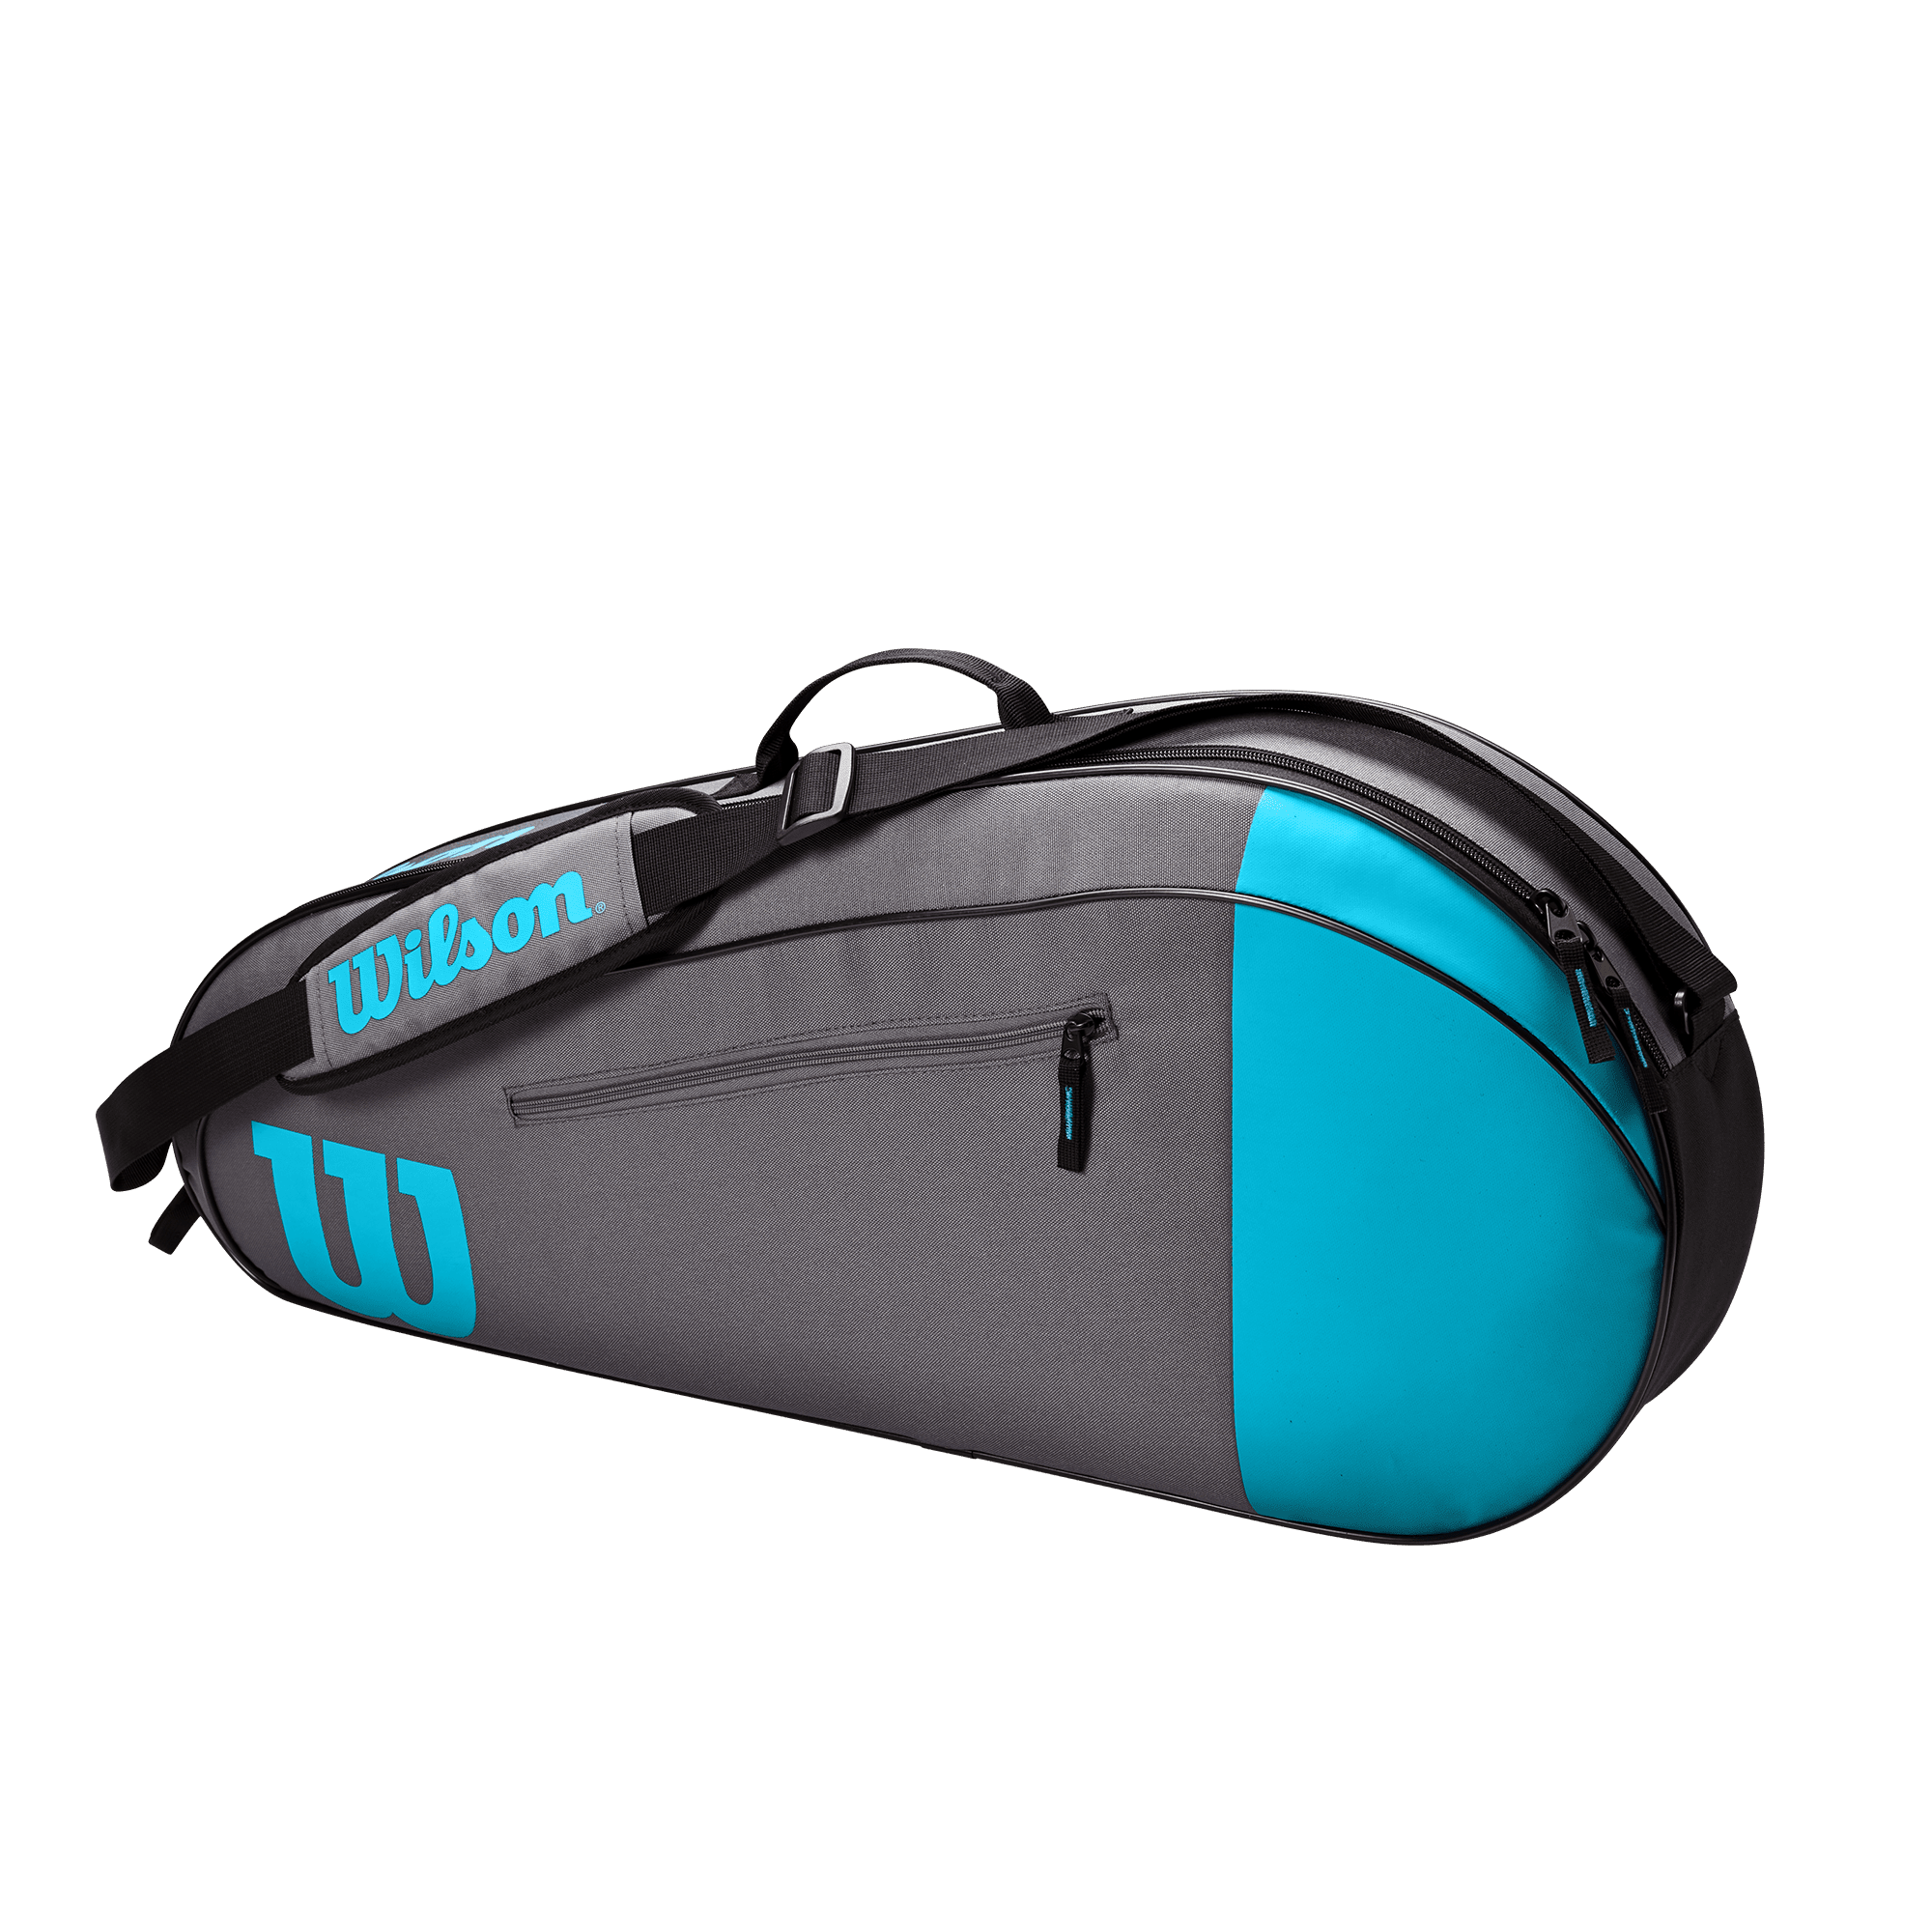 2021 tennis racket bag tennis Backpack sport accessories men women